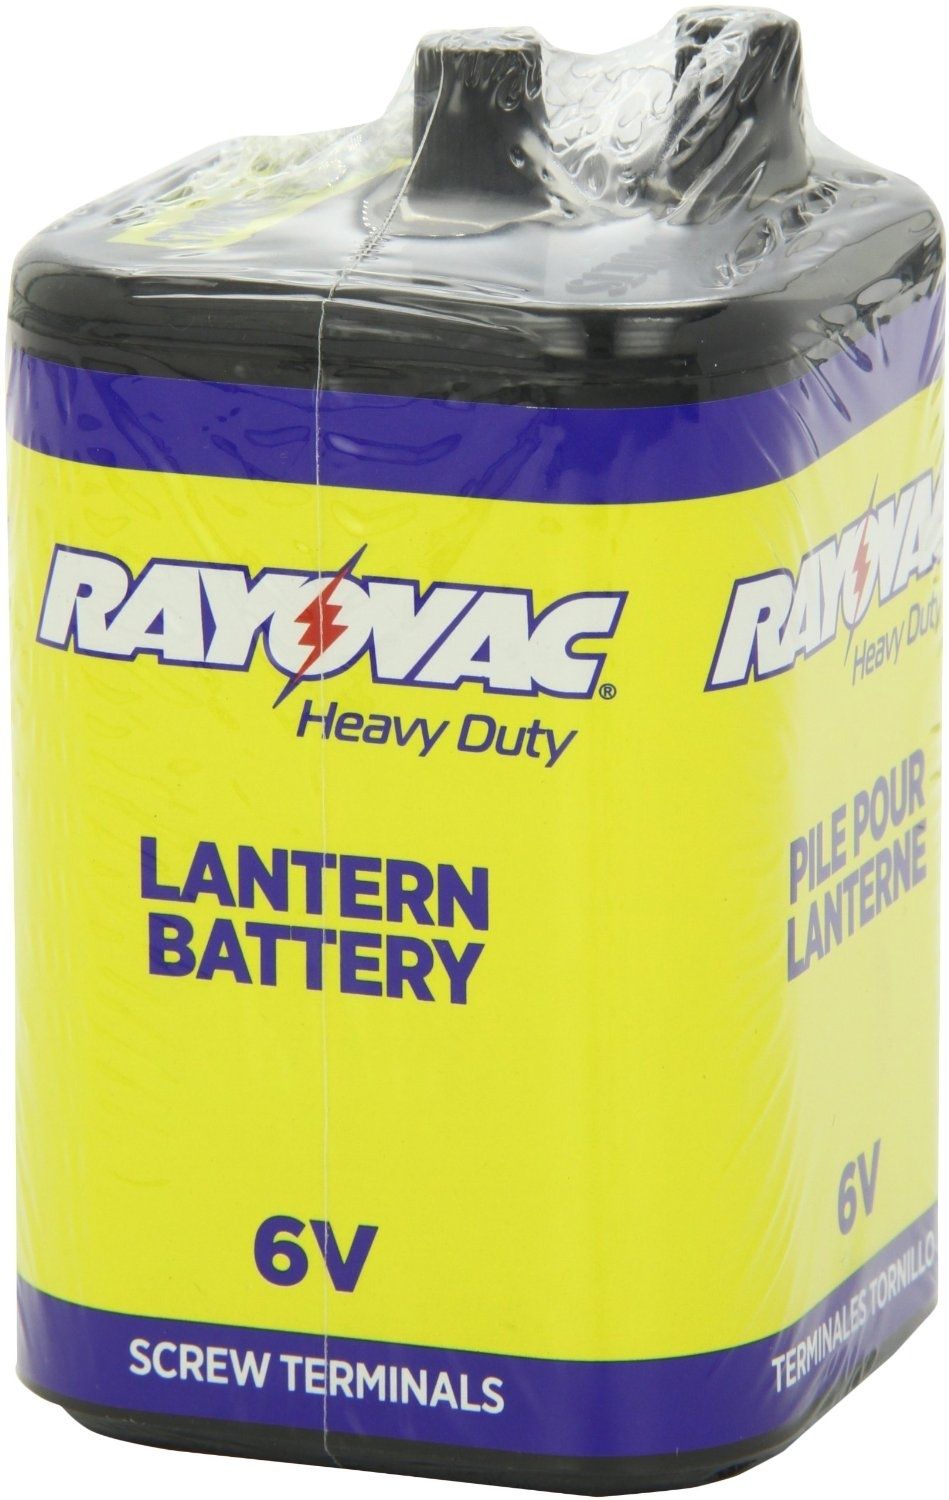 Rayovac 6V Heavy Duty Lantern Battery - Yellow (945R4C) for sale online